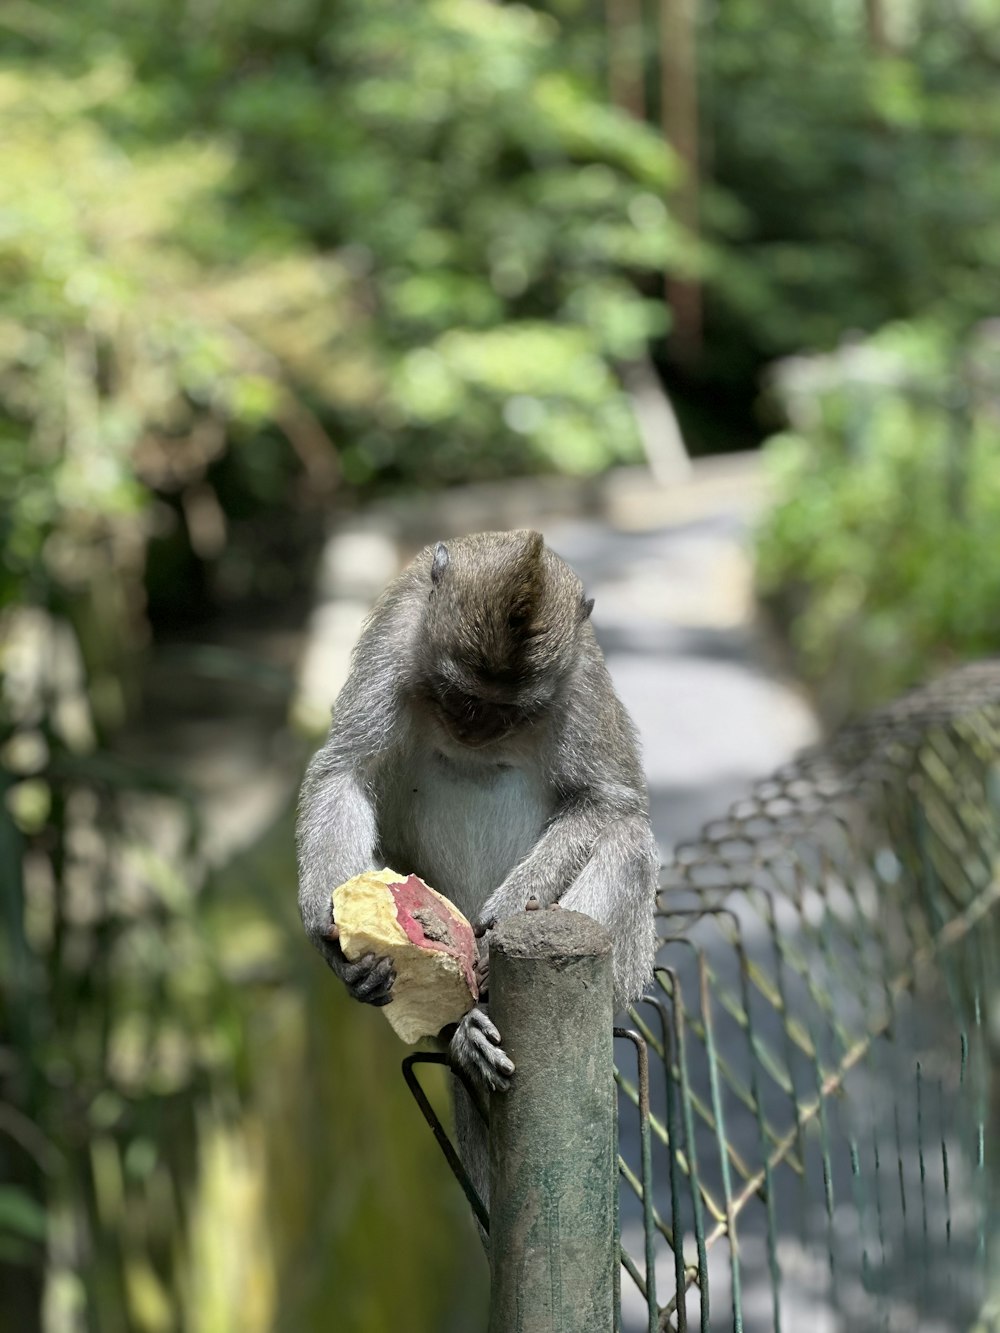 a monkey sitting on a fence eating a banana